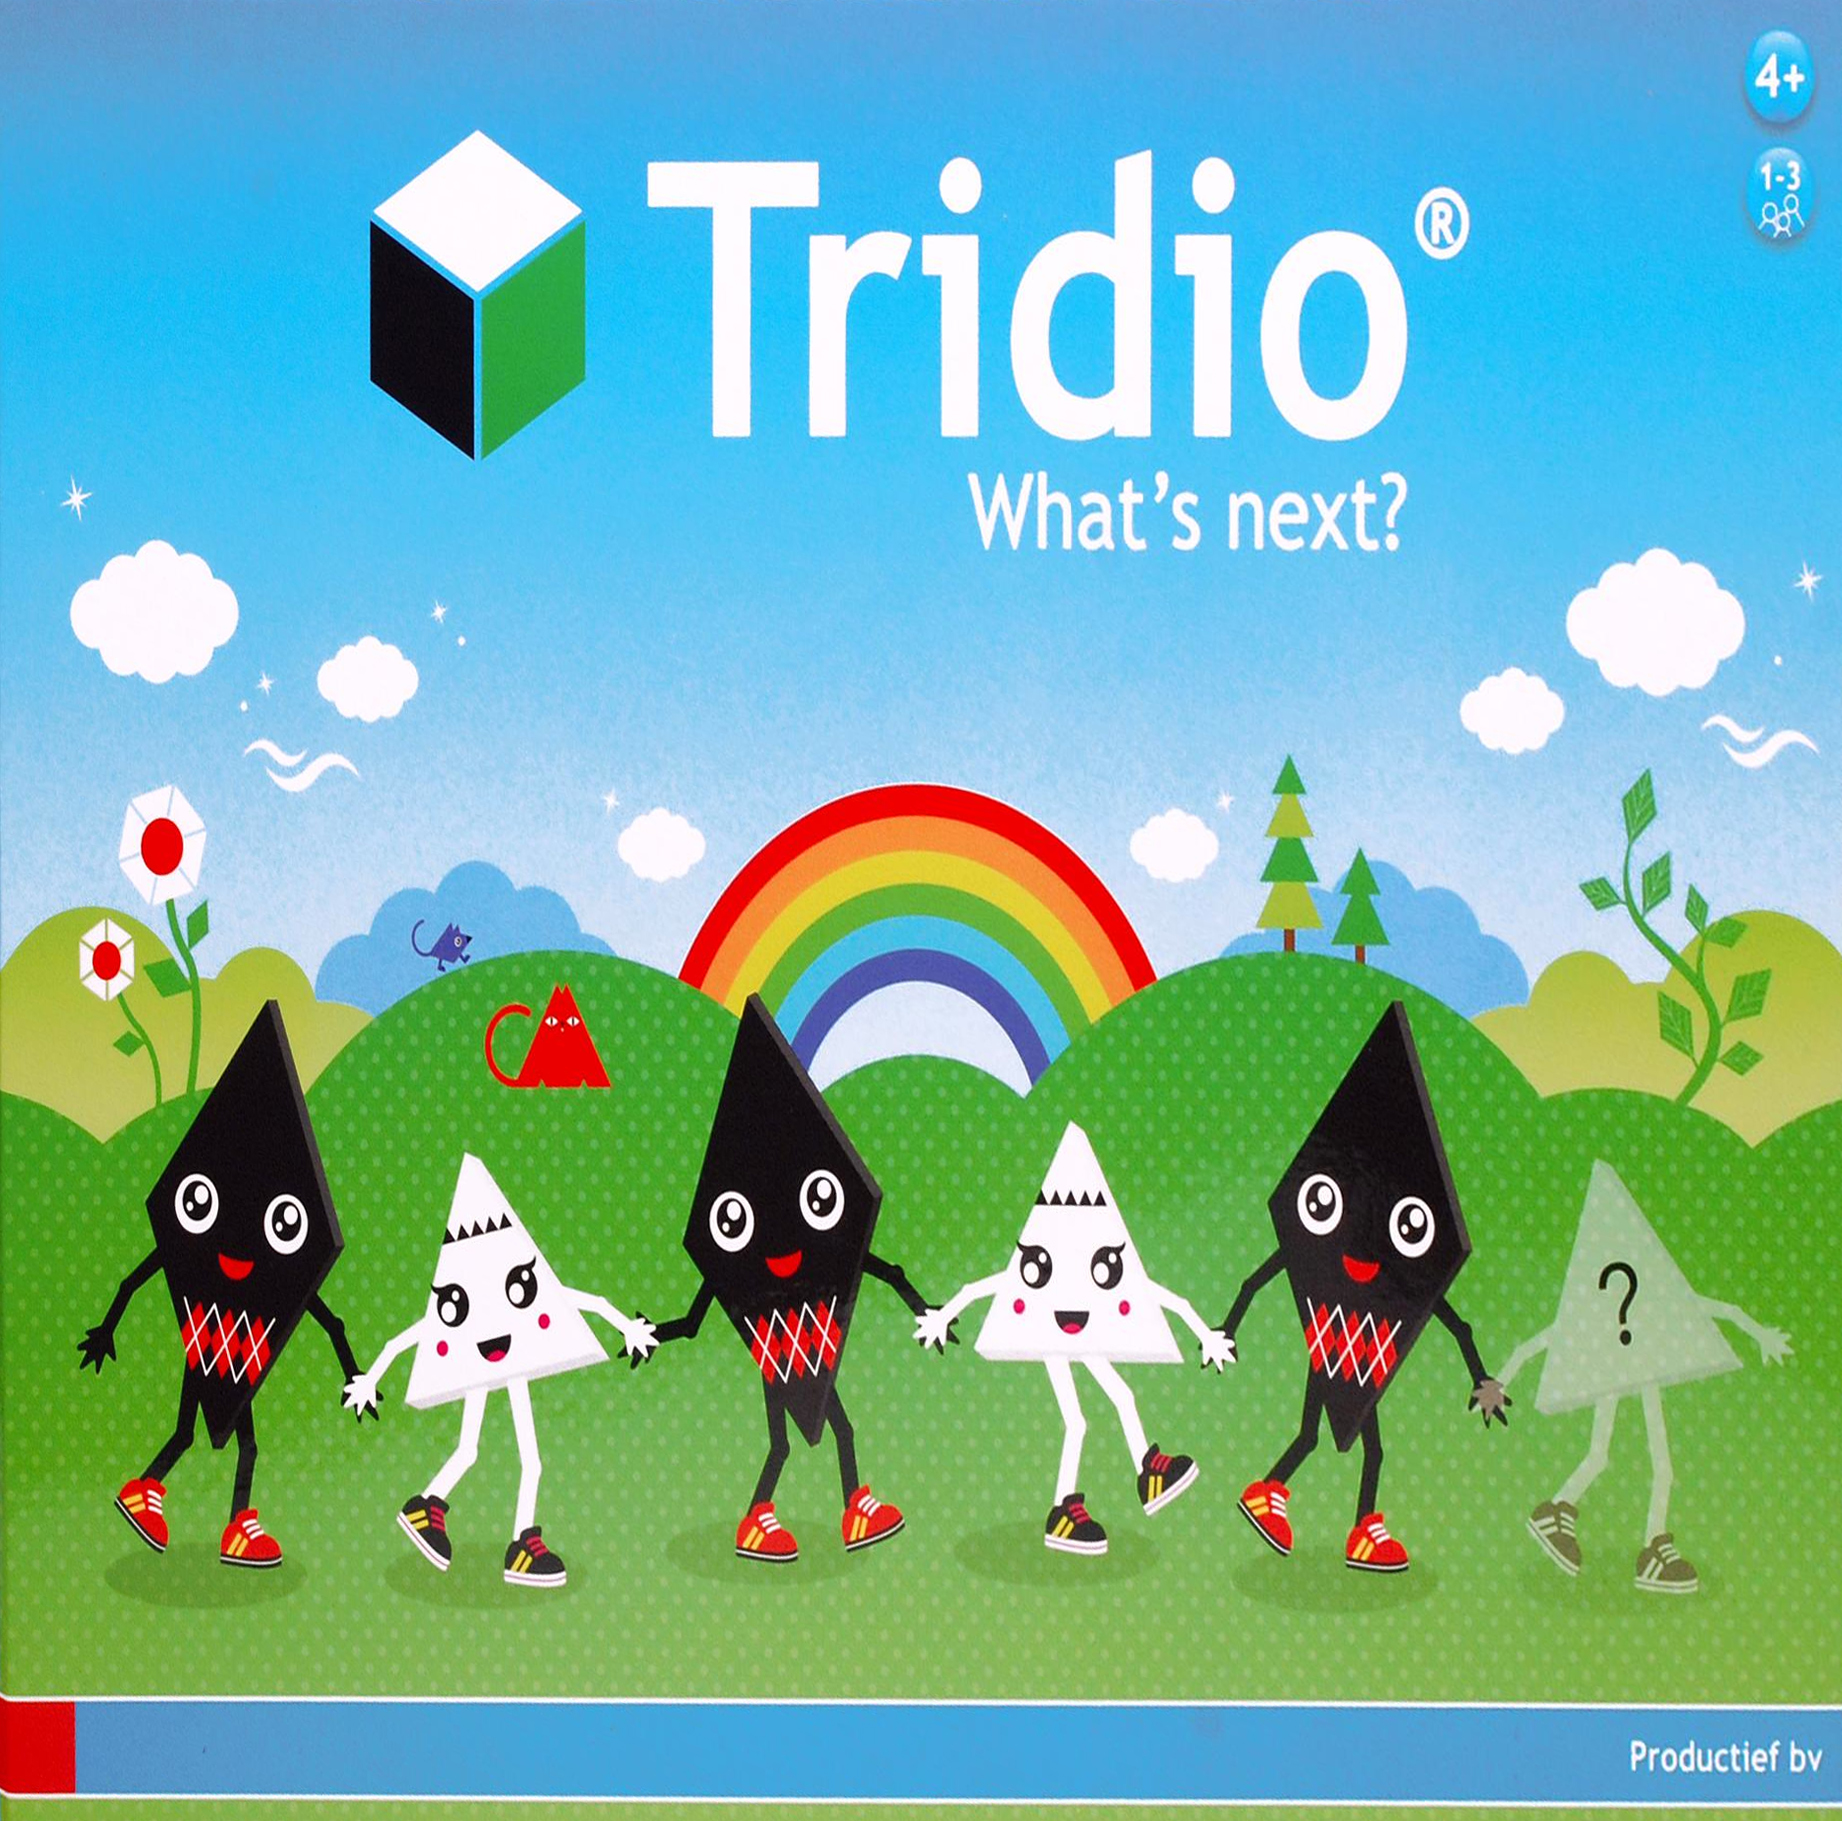 Tridio: What's next?